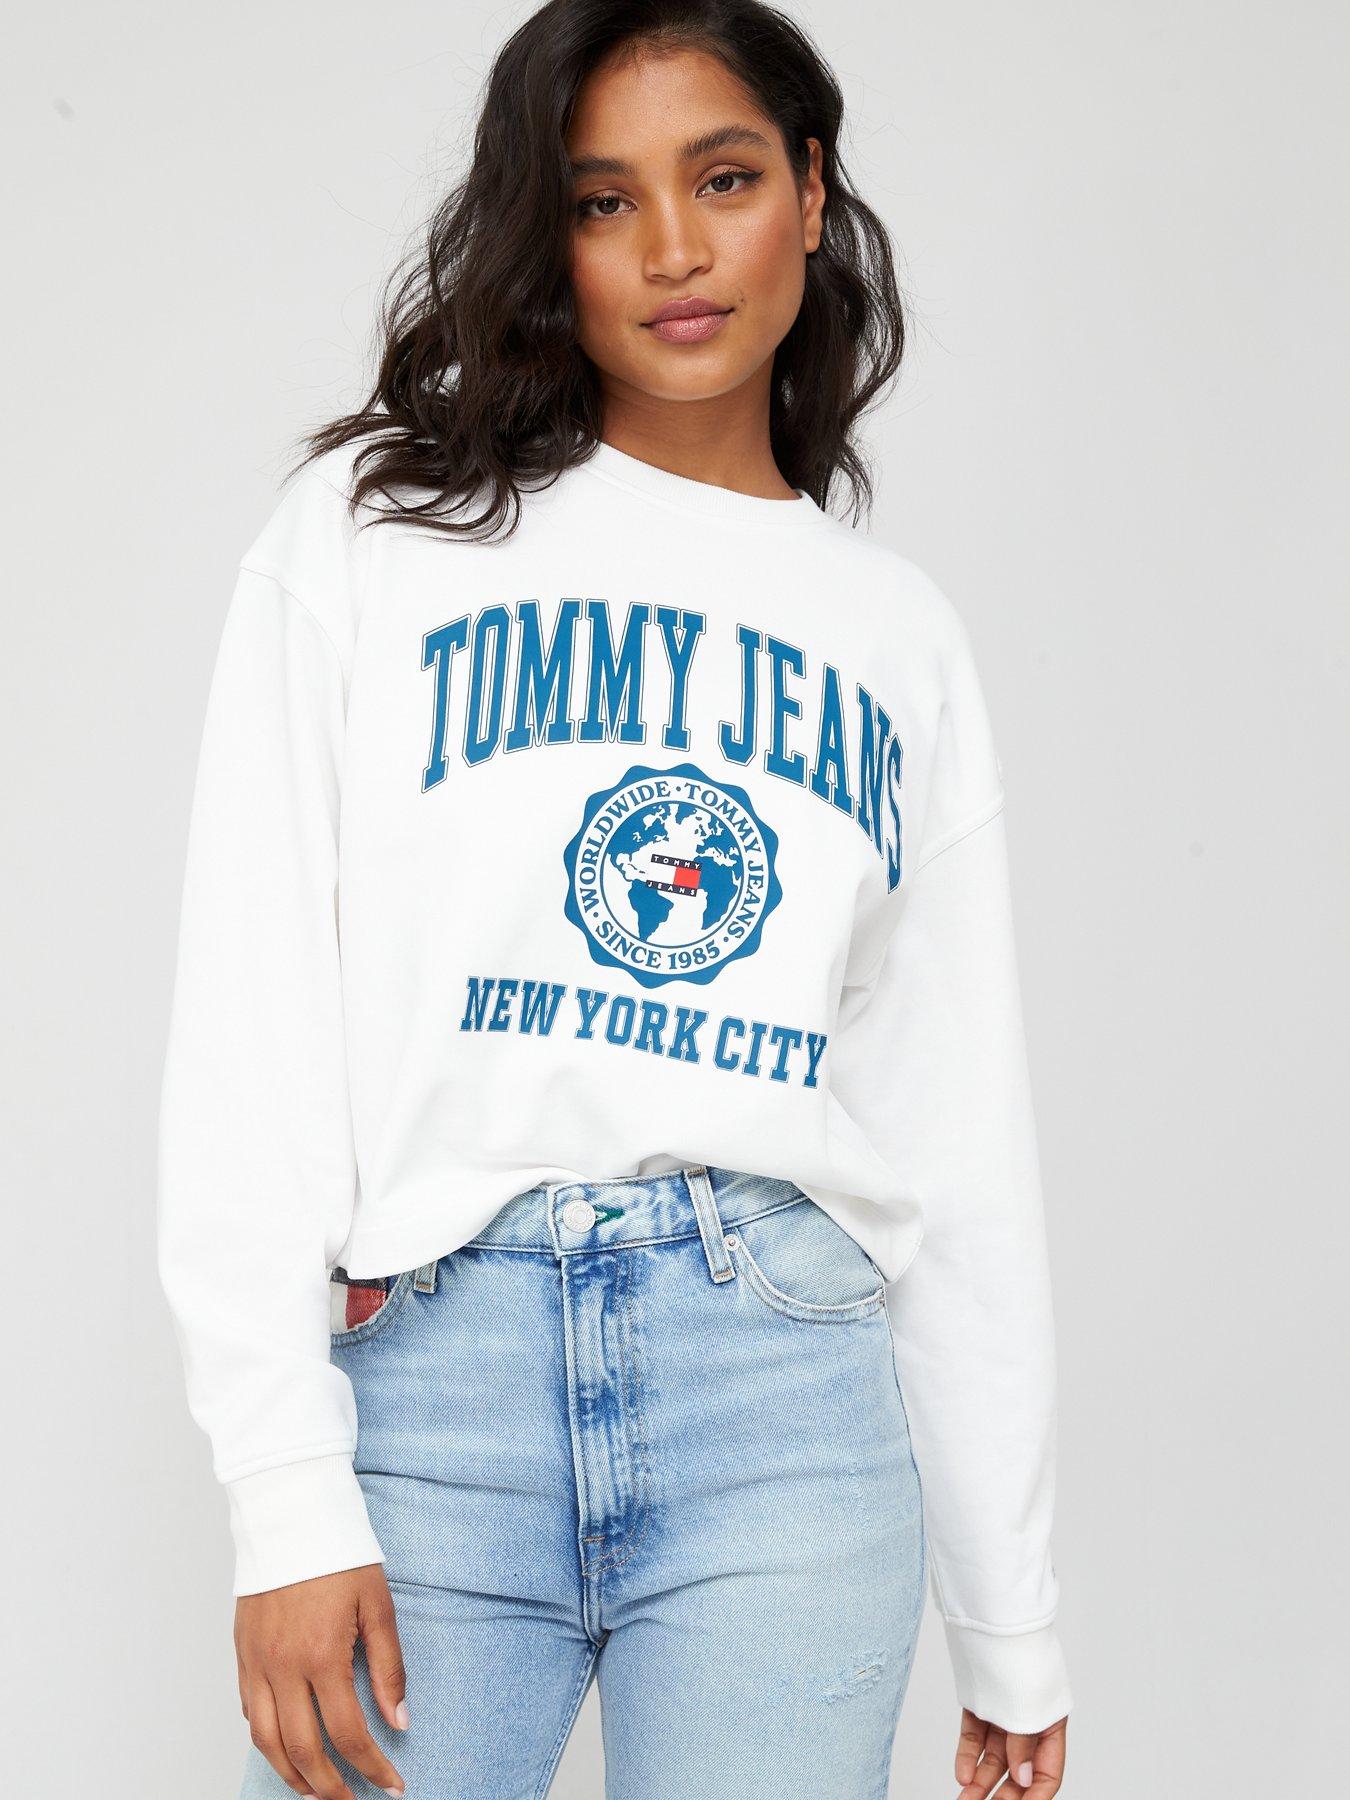 Beige L discount 64% WOMEN FASHION Jumpers & Sweatshirts Jumper Knitted Tommy Hilfiger jumper 